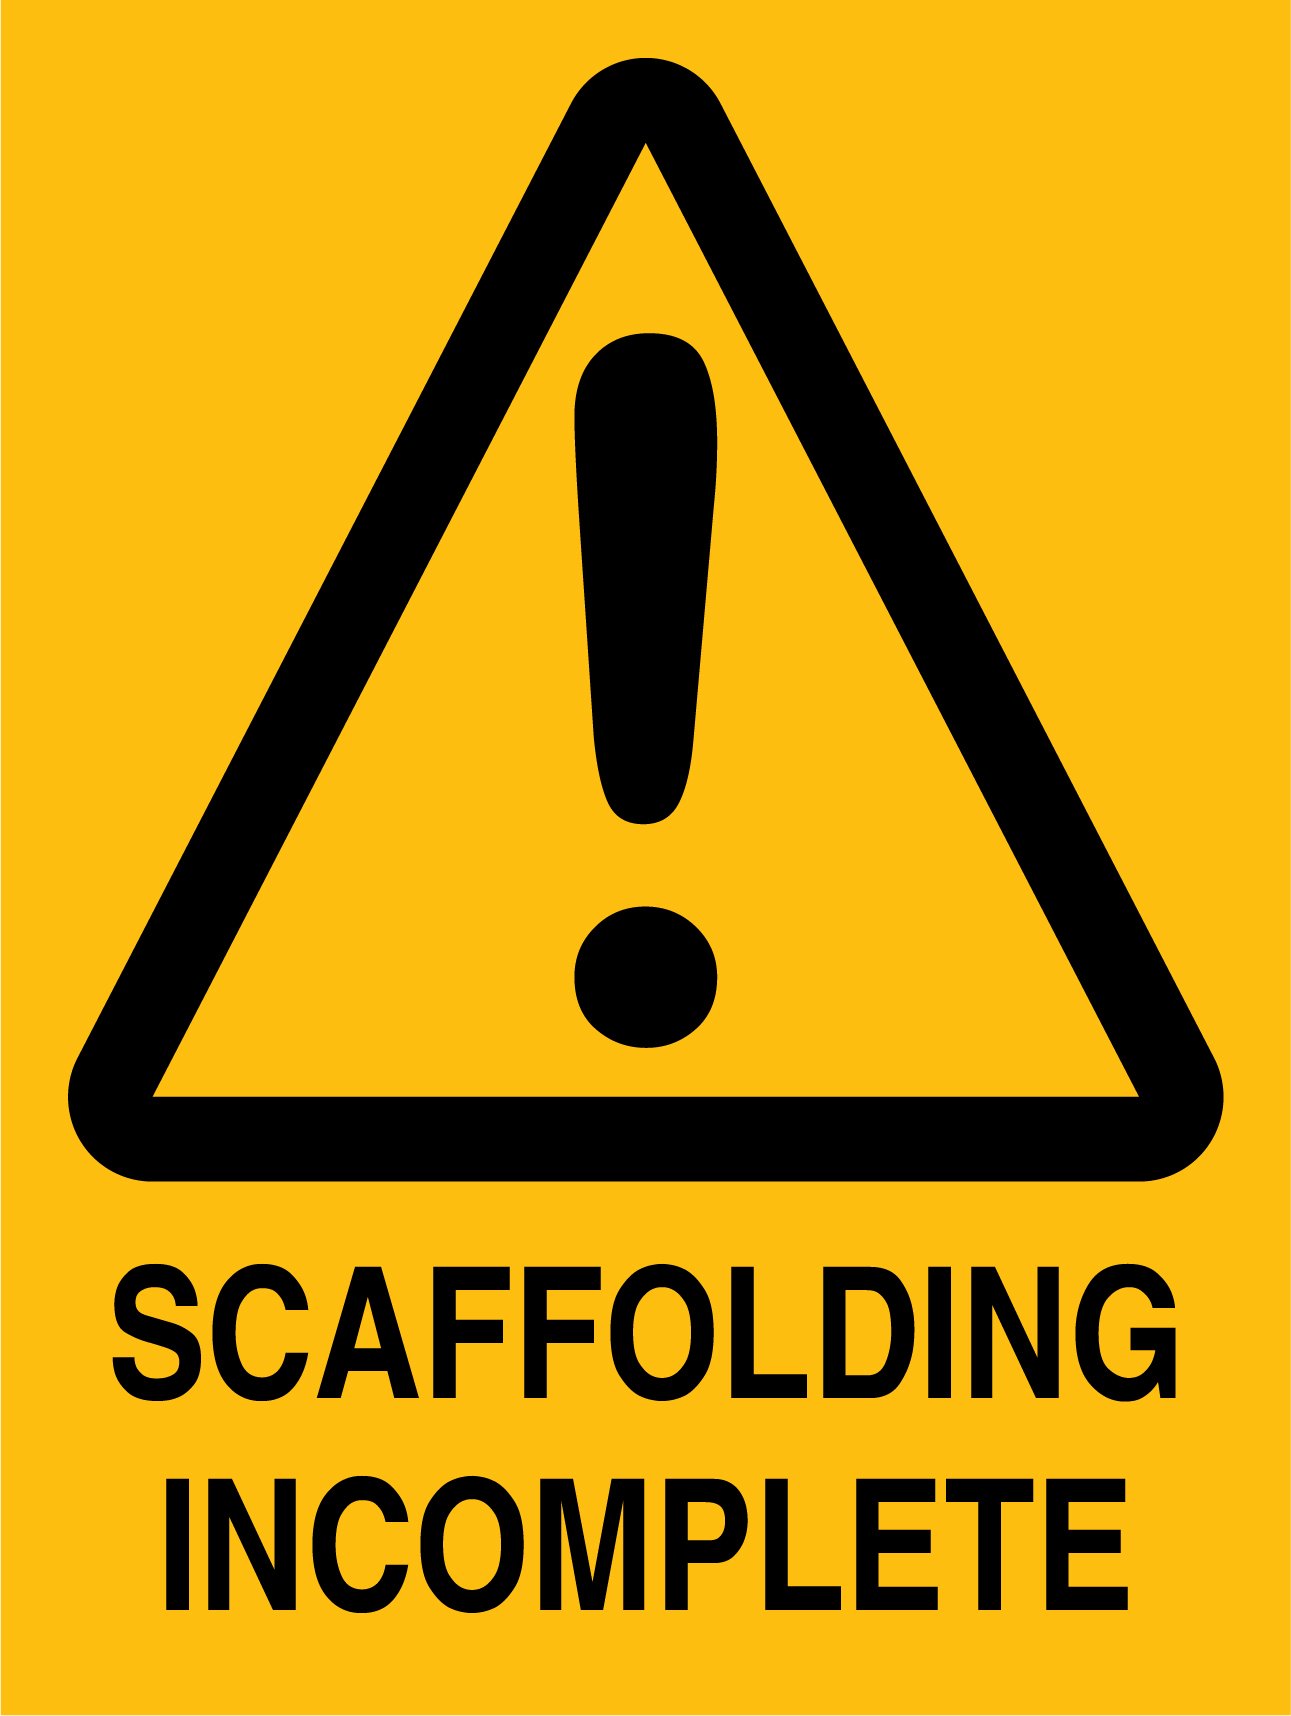 Hazard - Scaffolding Incomplete - 450 x 600